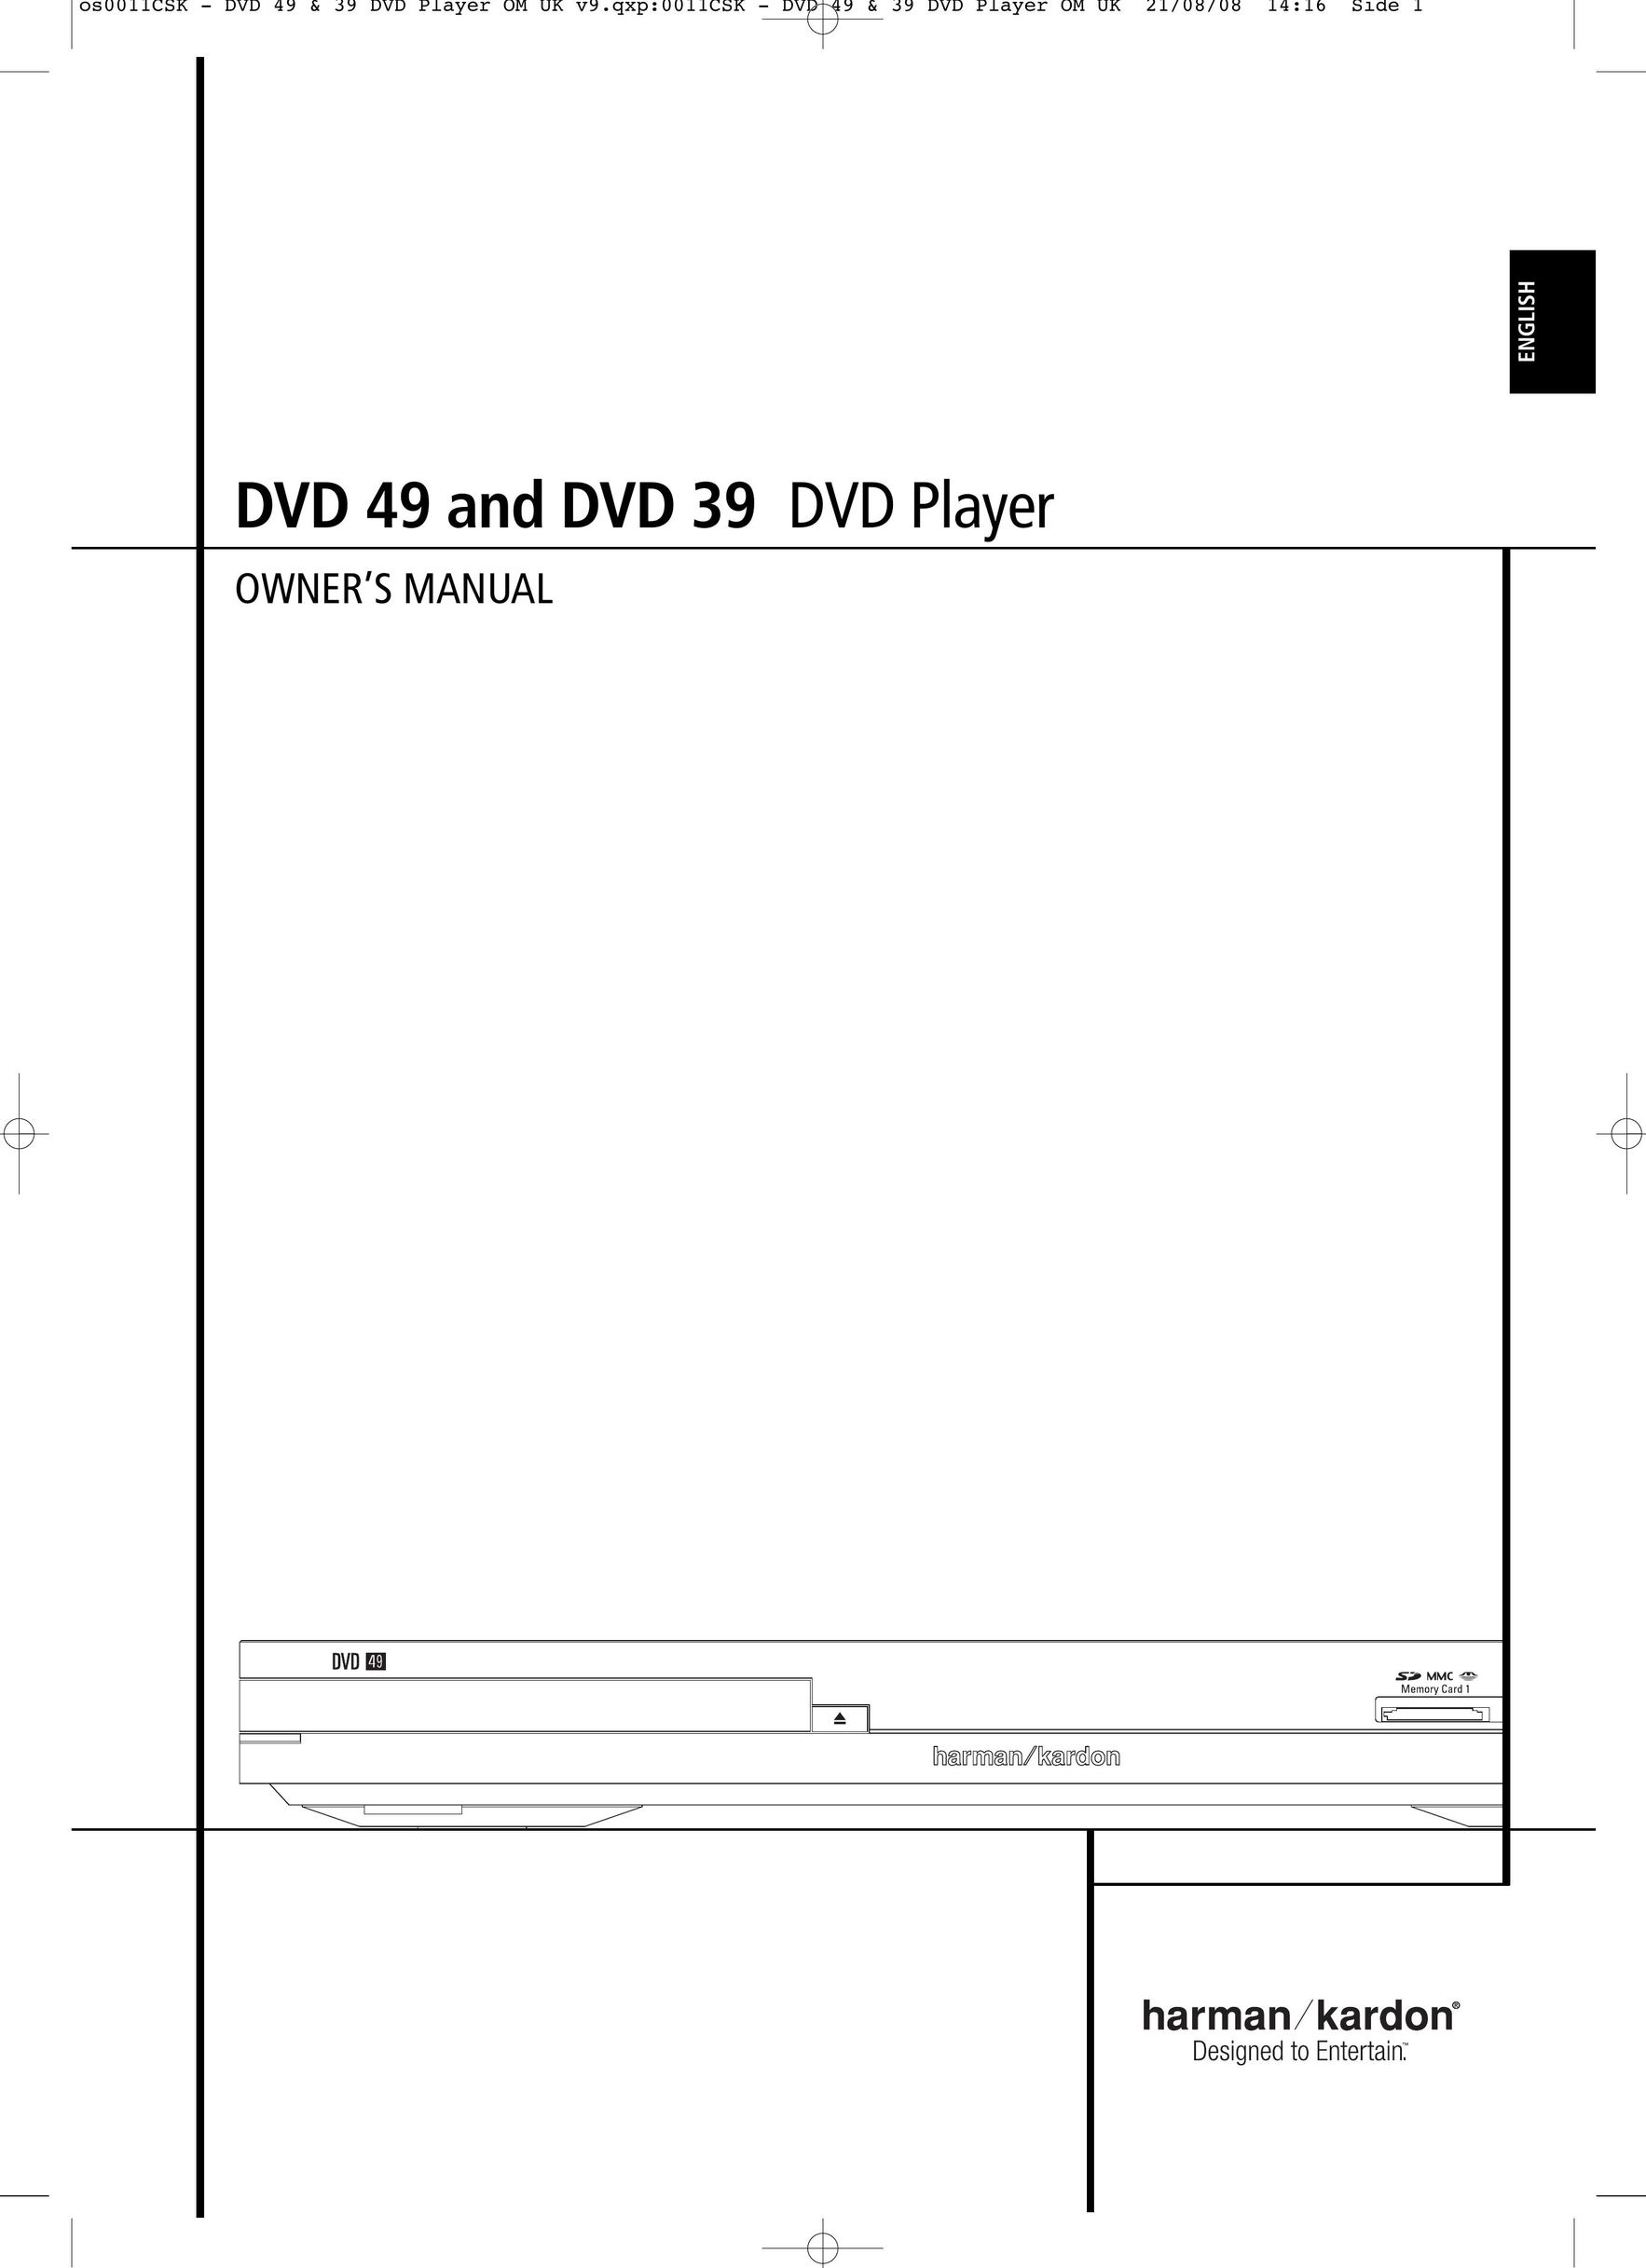 Harman-Kardon DVD 39 DVD Player User Manual